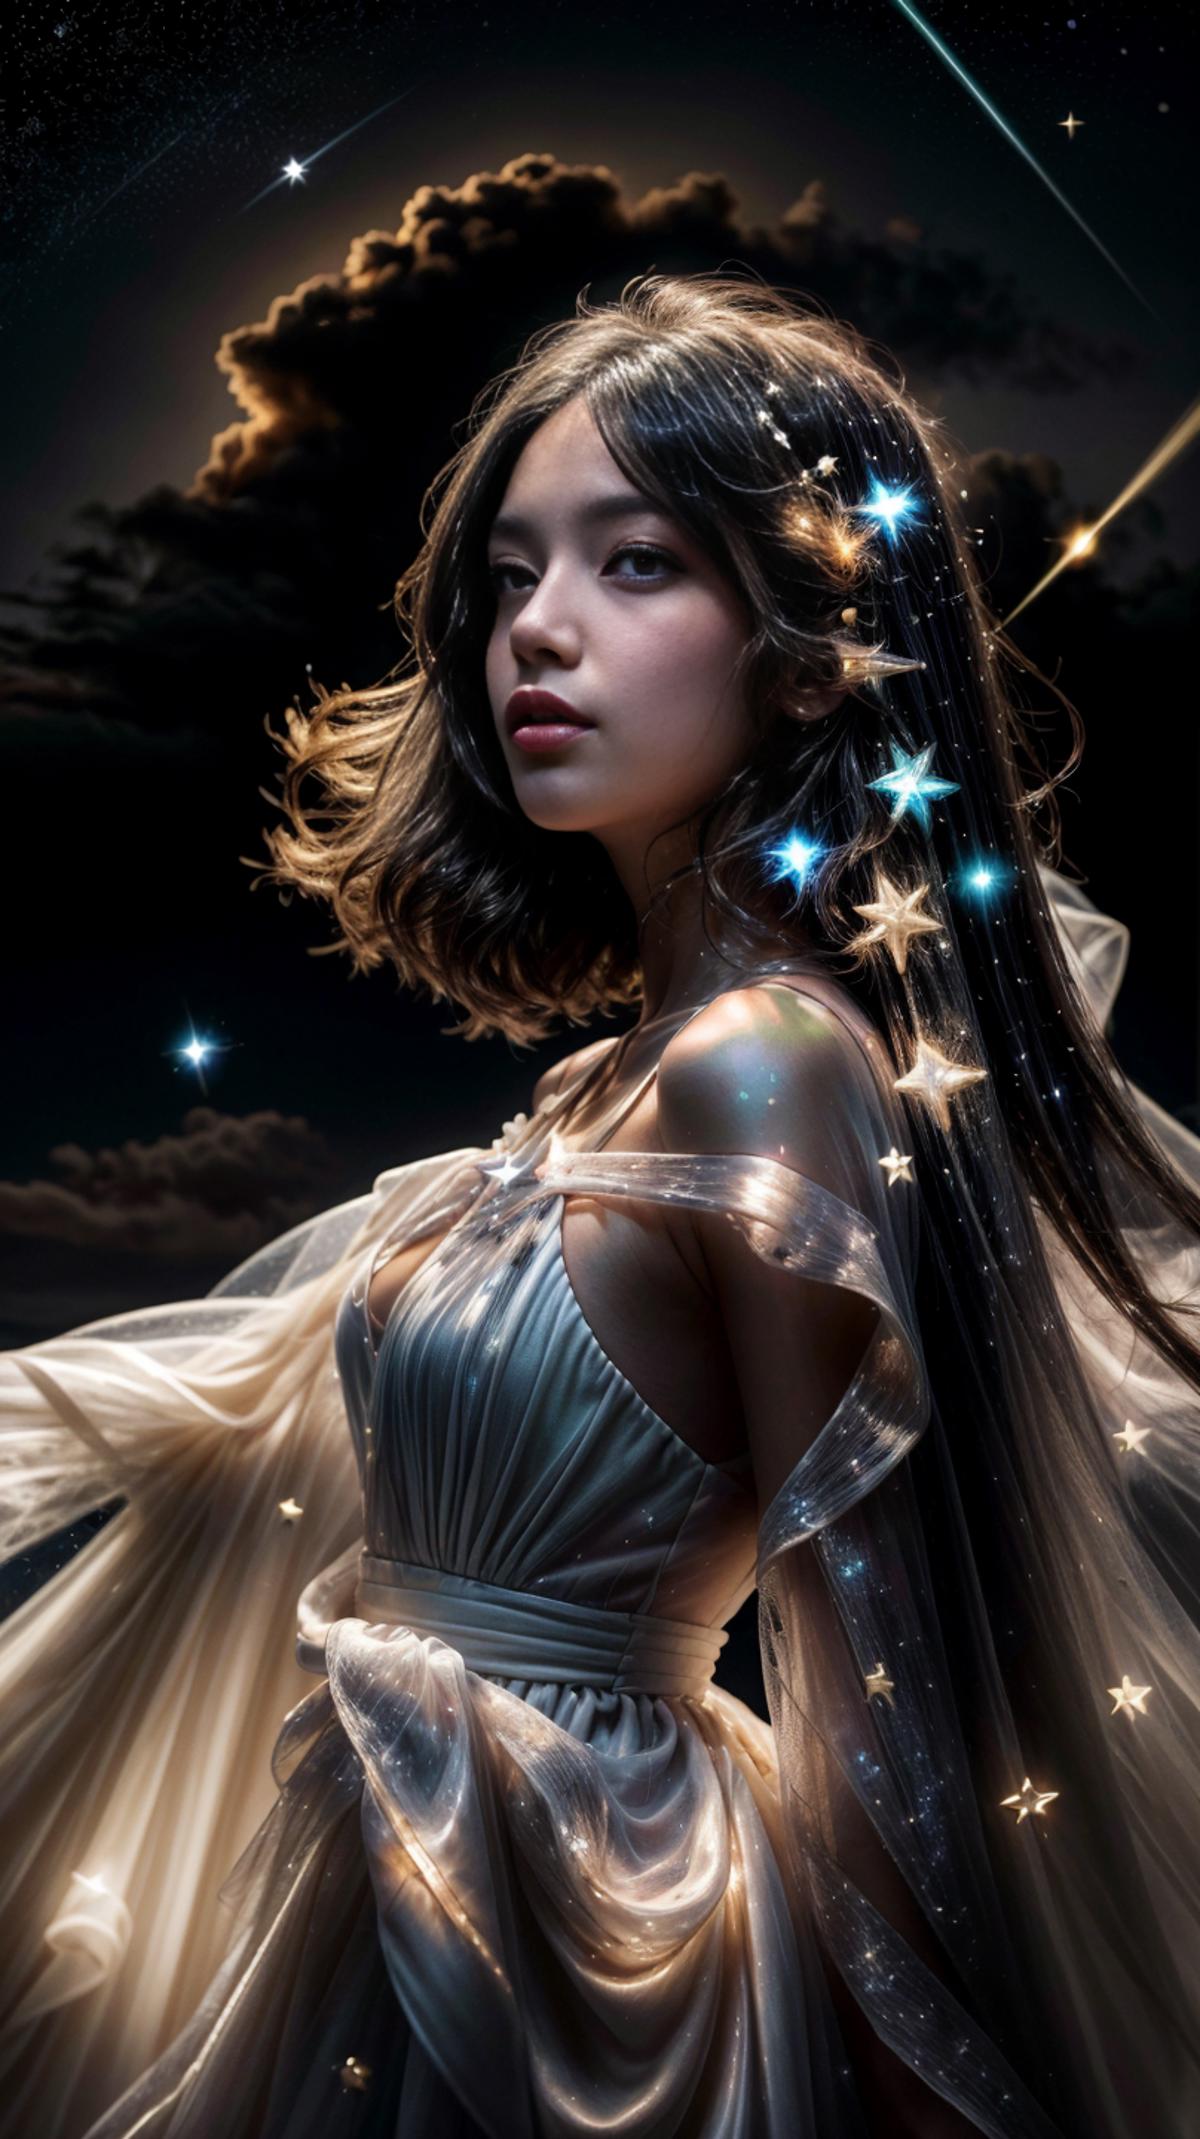 繁星若梦 Starry Dreams image by dschonich